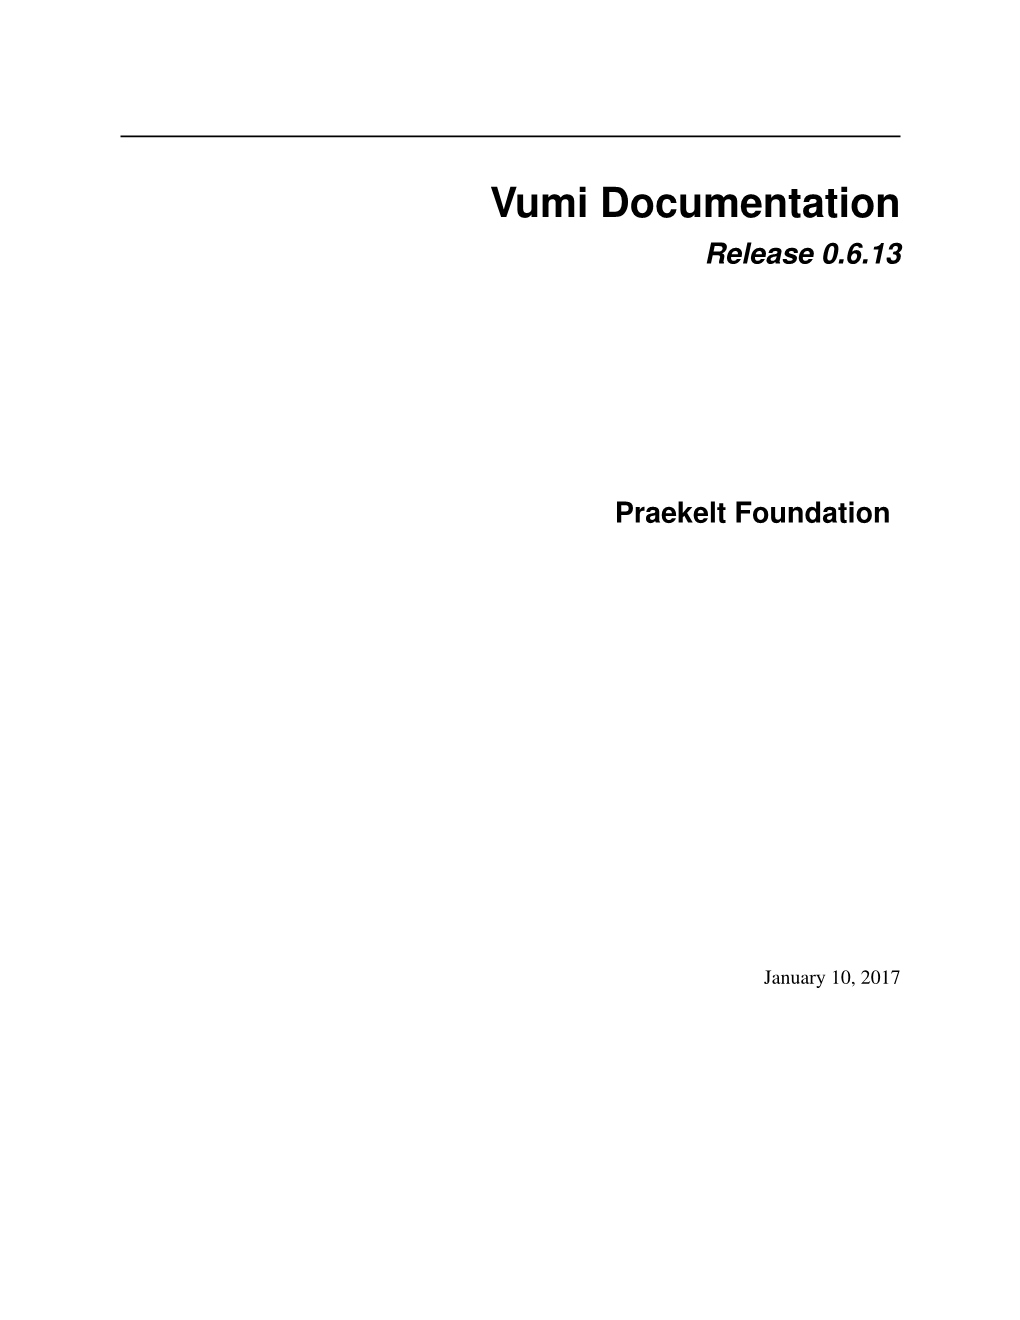 Vumi Documentation Release 0.6.13